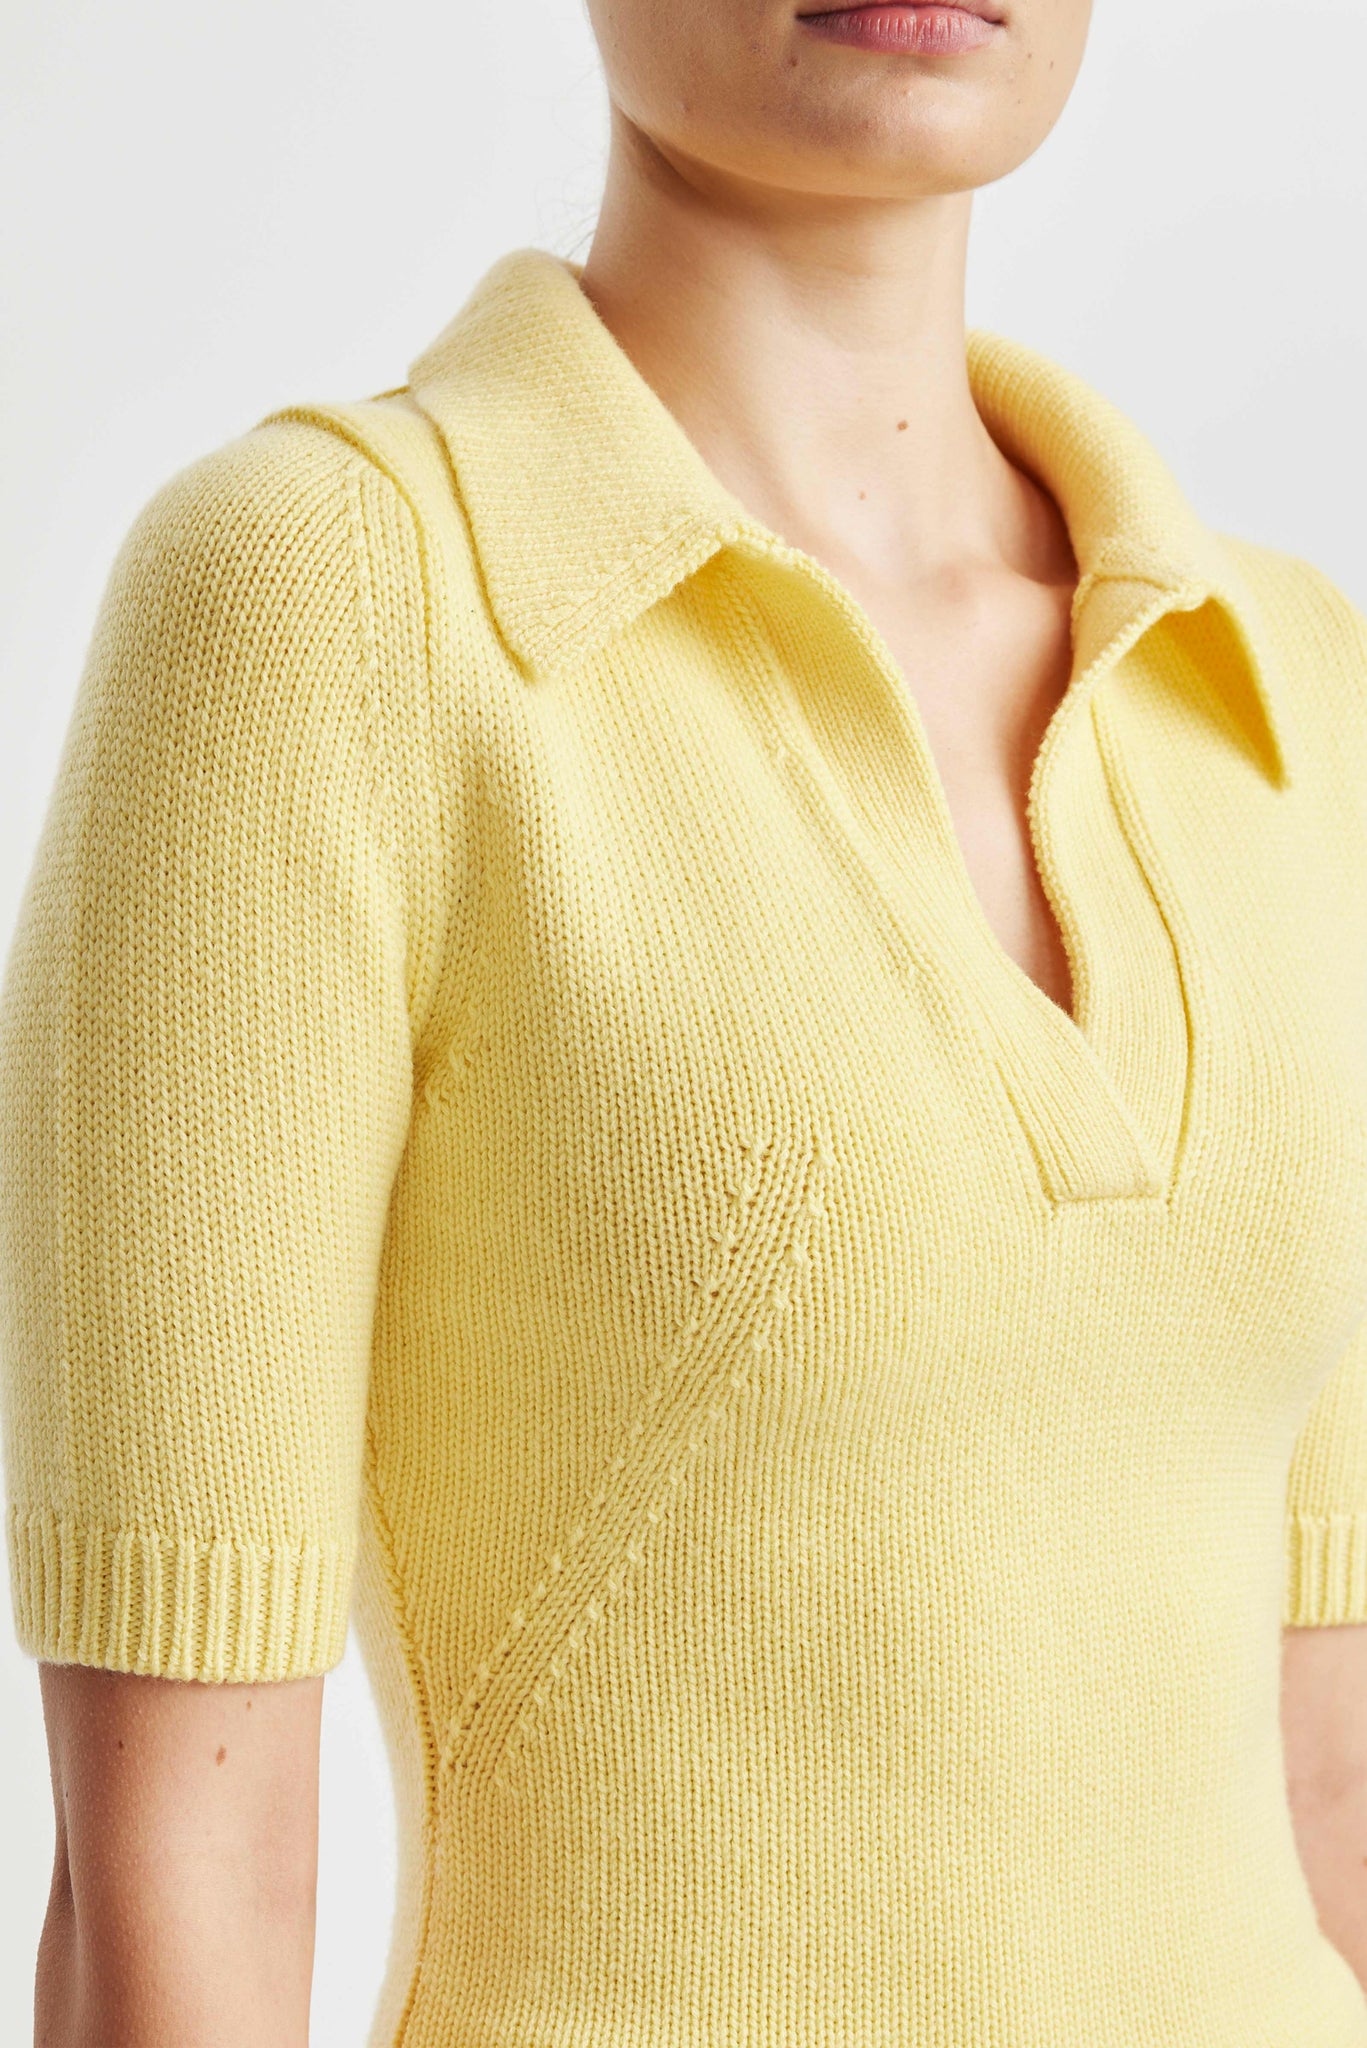 Dory Lemon Knitted Top | Emilia Wickstead